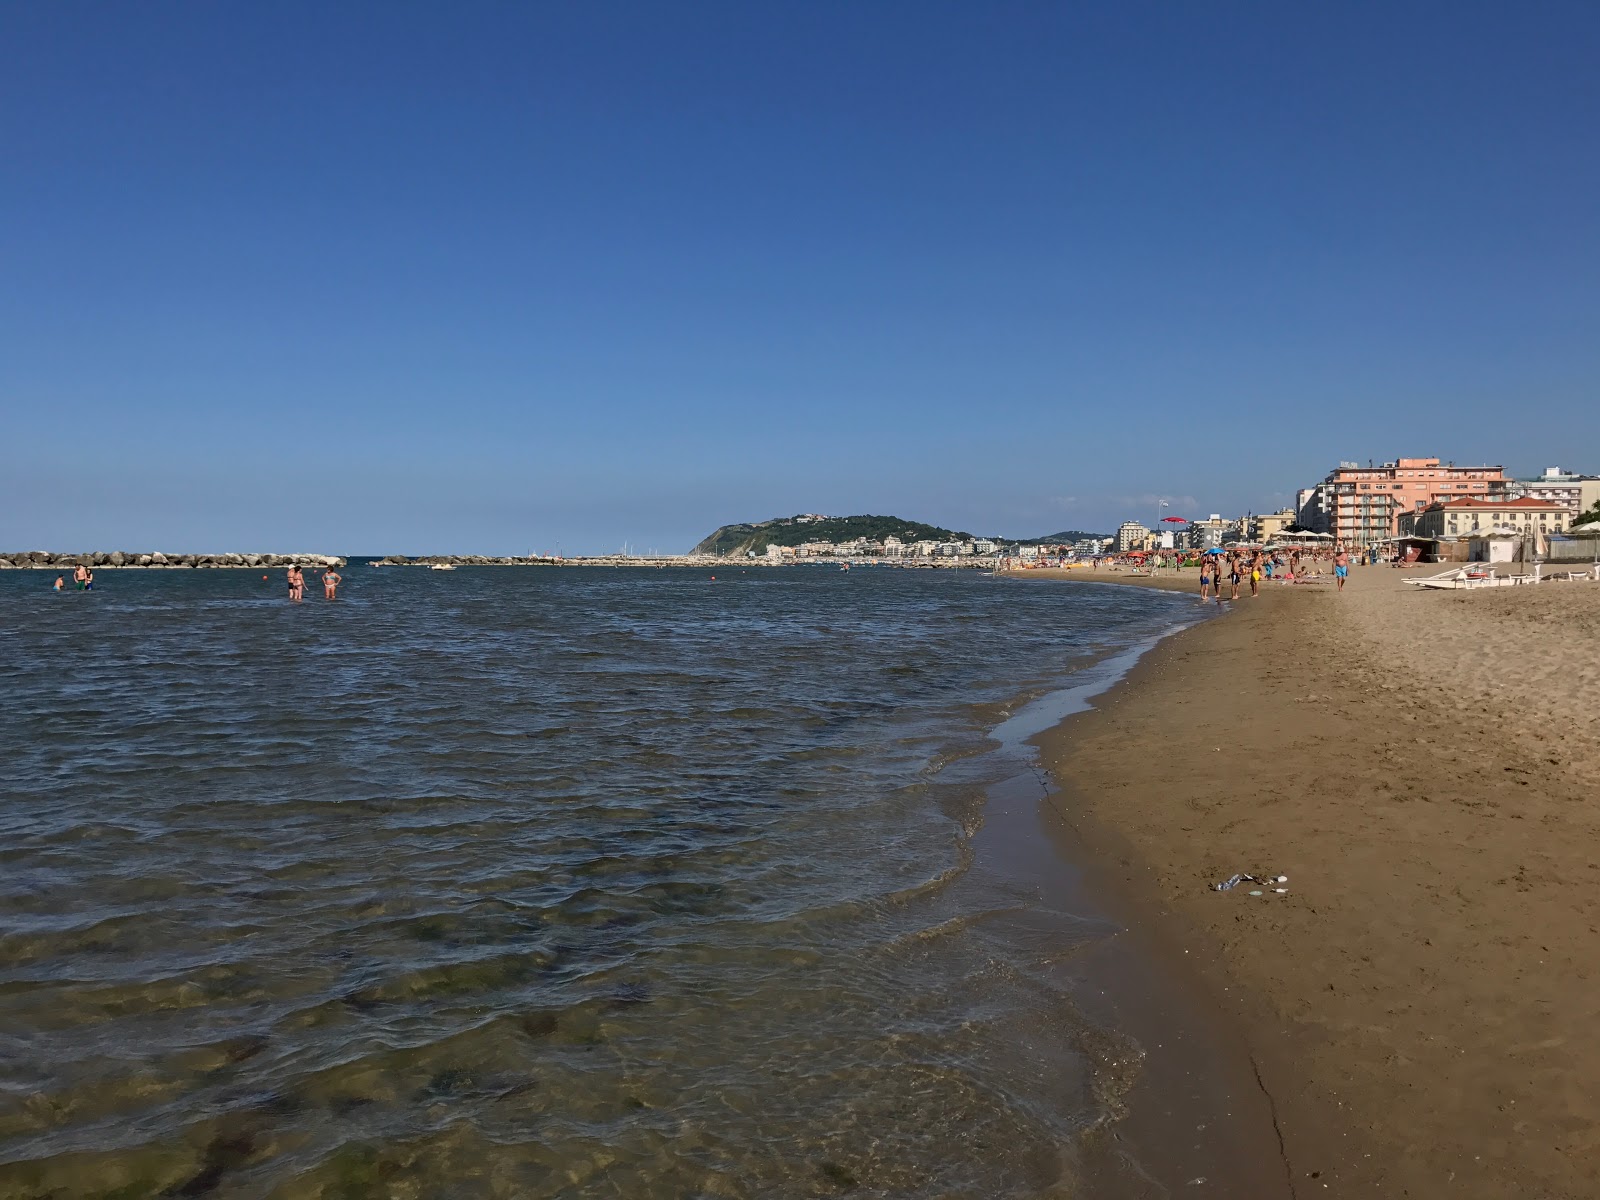 Fotografie cu Spiaggia di Cattolica II cu o suprafață de nisip strălucitor